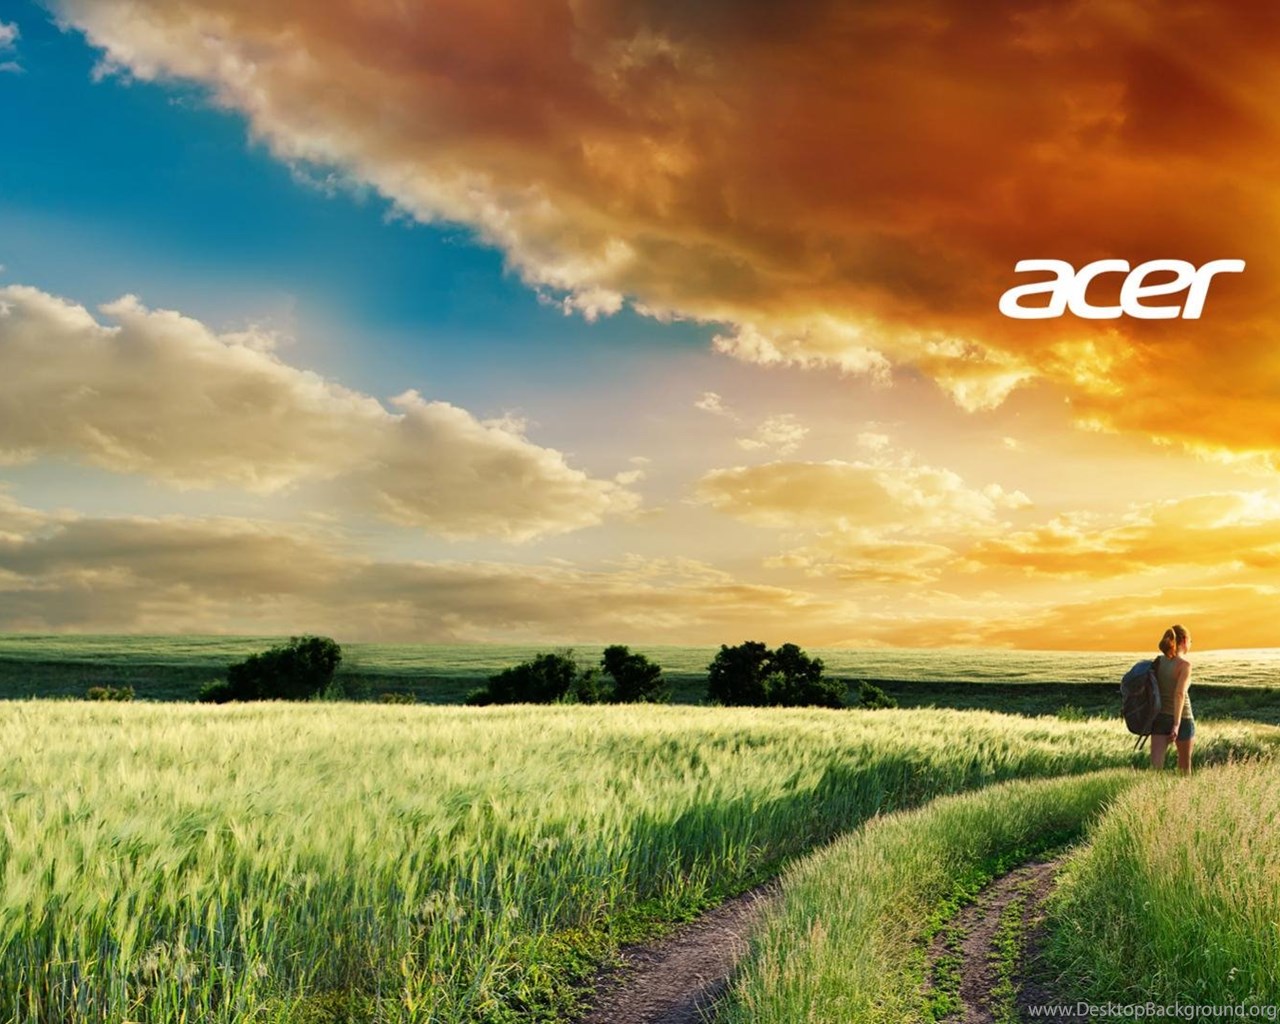  Acer  HD  Wallpapers  Desktop  Background